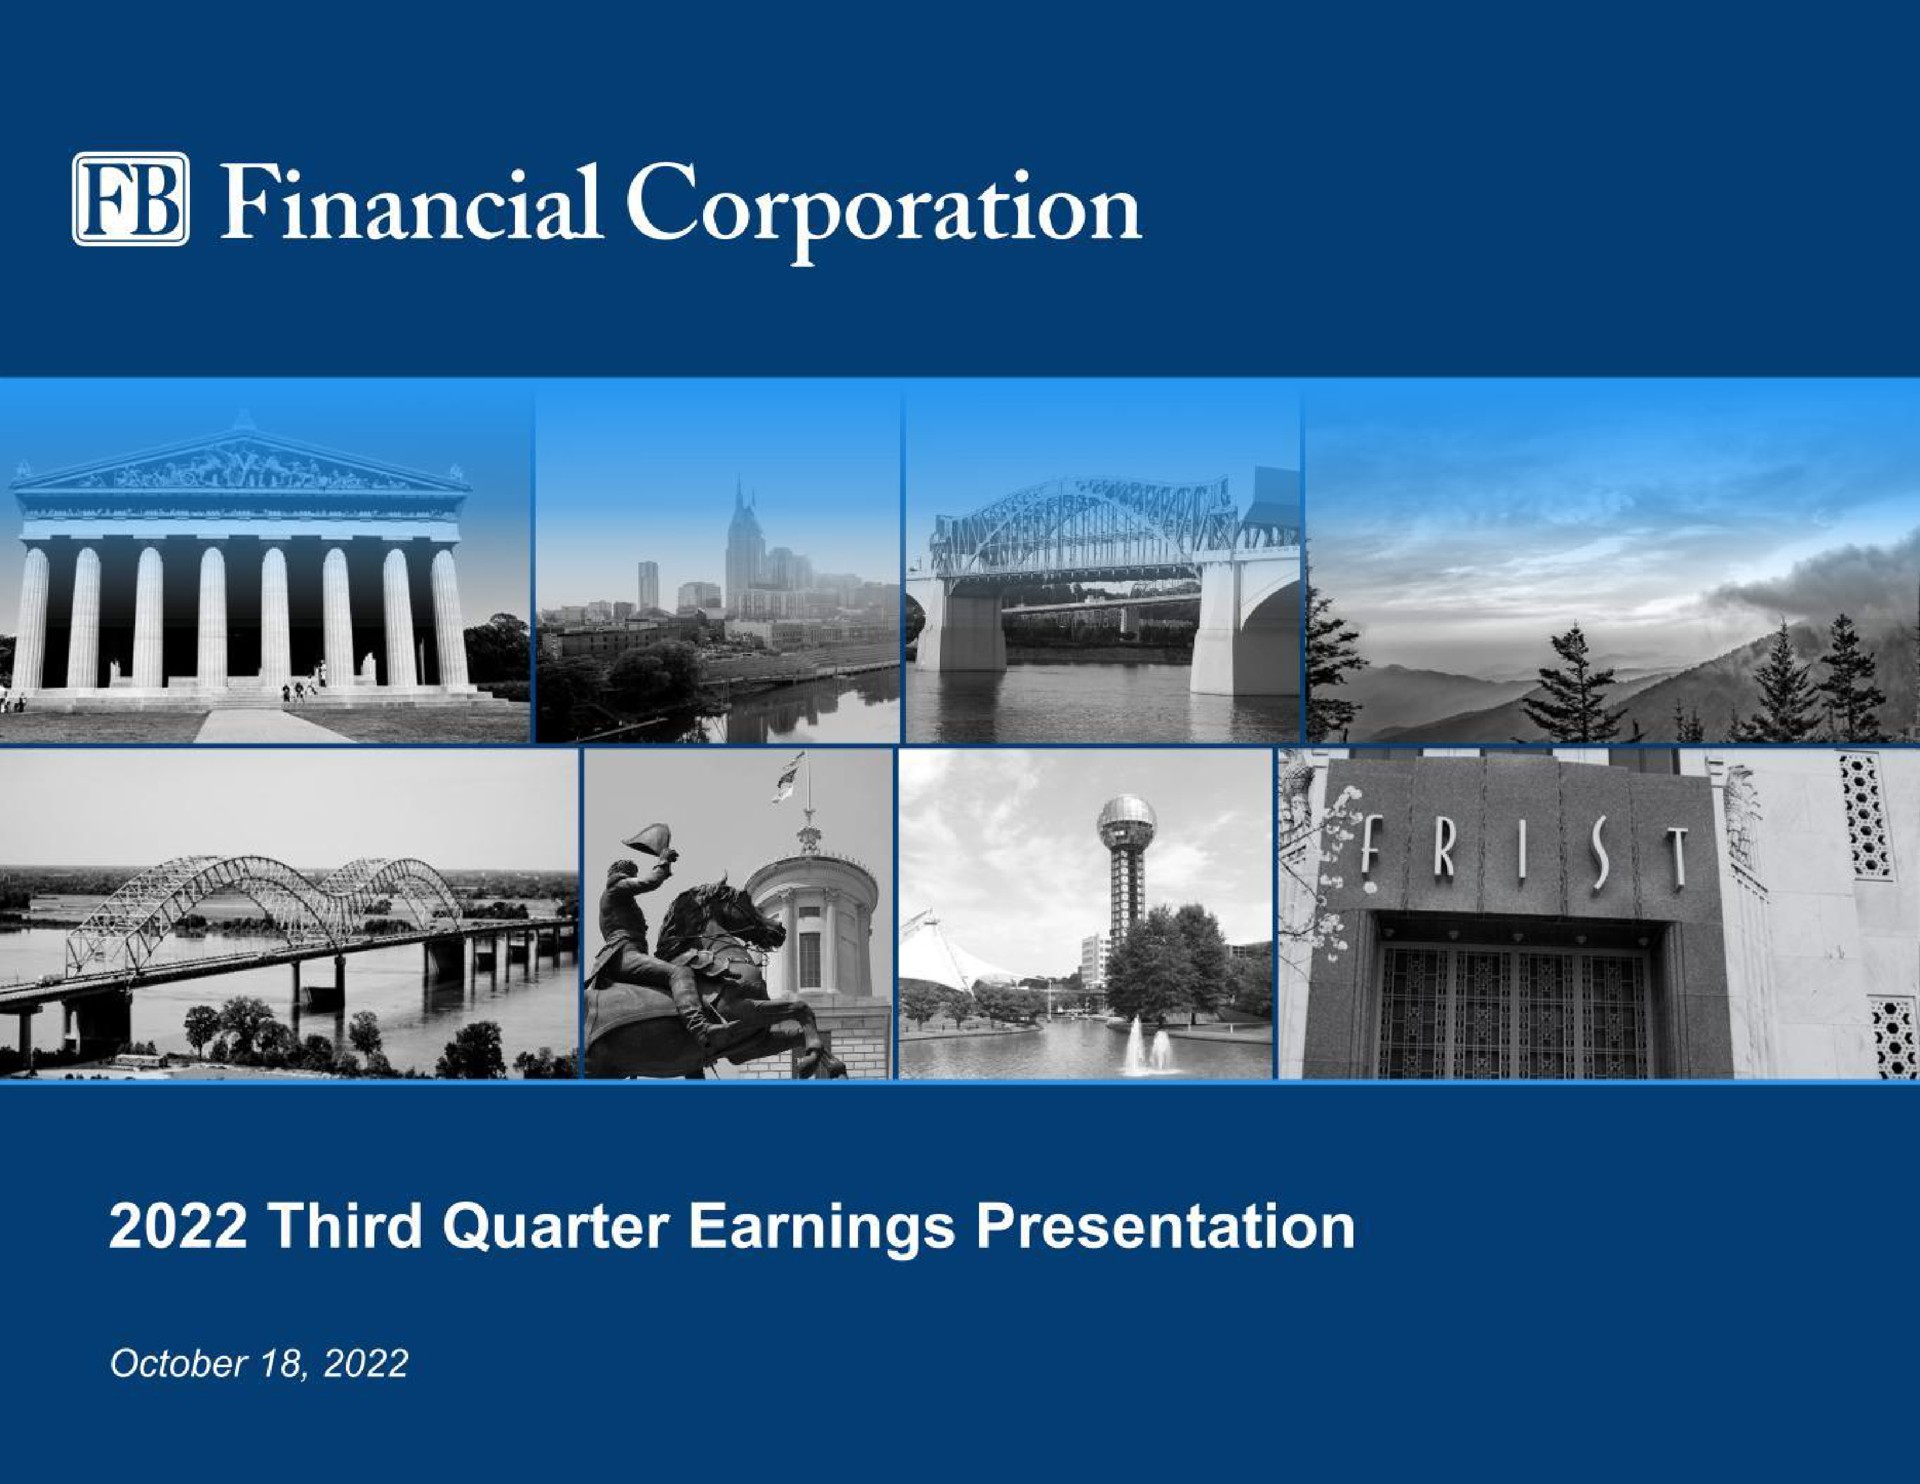 financial corporation third quarter earnings presentation | FB Financial